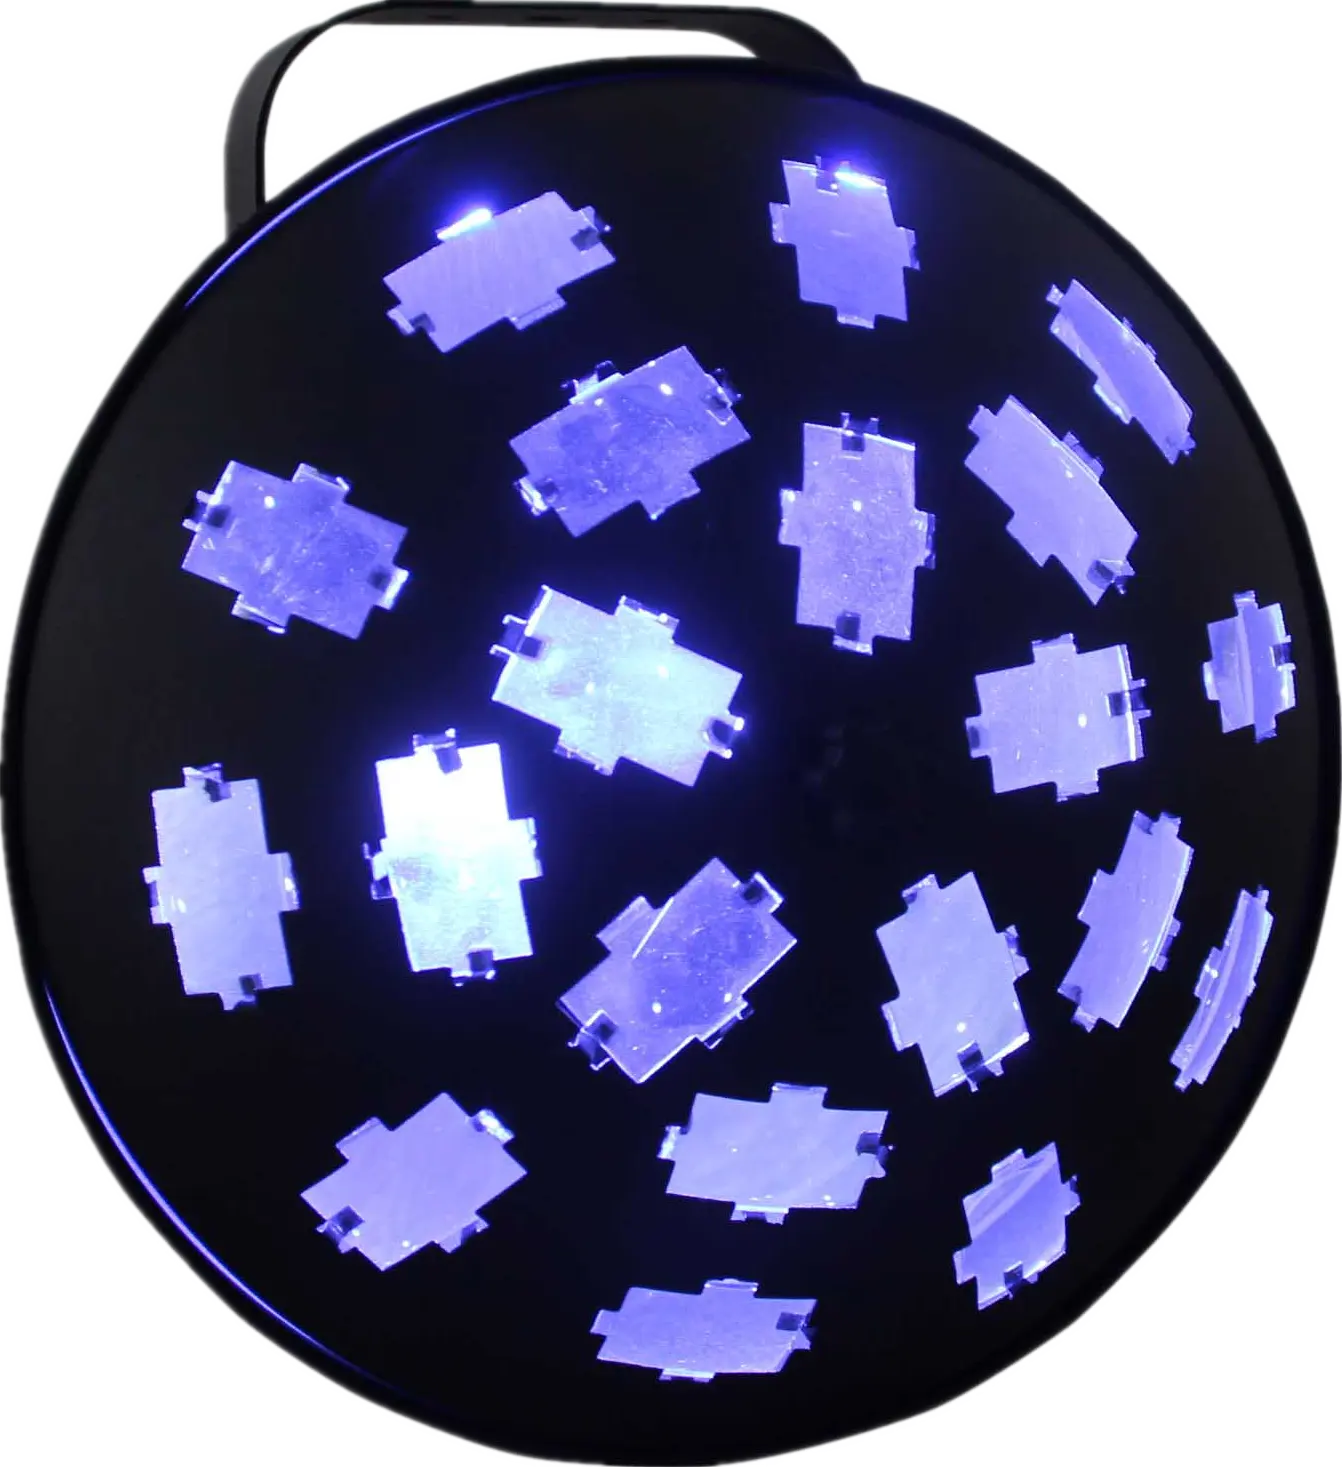 DJ Disco Party Lighting 6 in 1 Sounds Activated Led effect light For Karaoke Pub KTV Bar Dance Stage Light